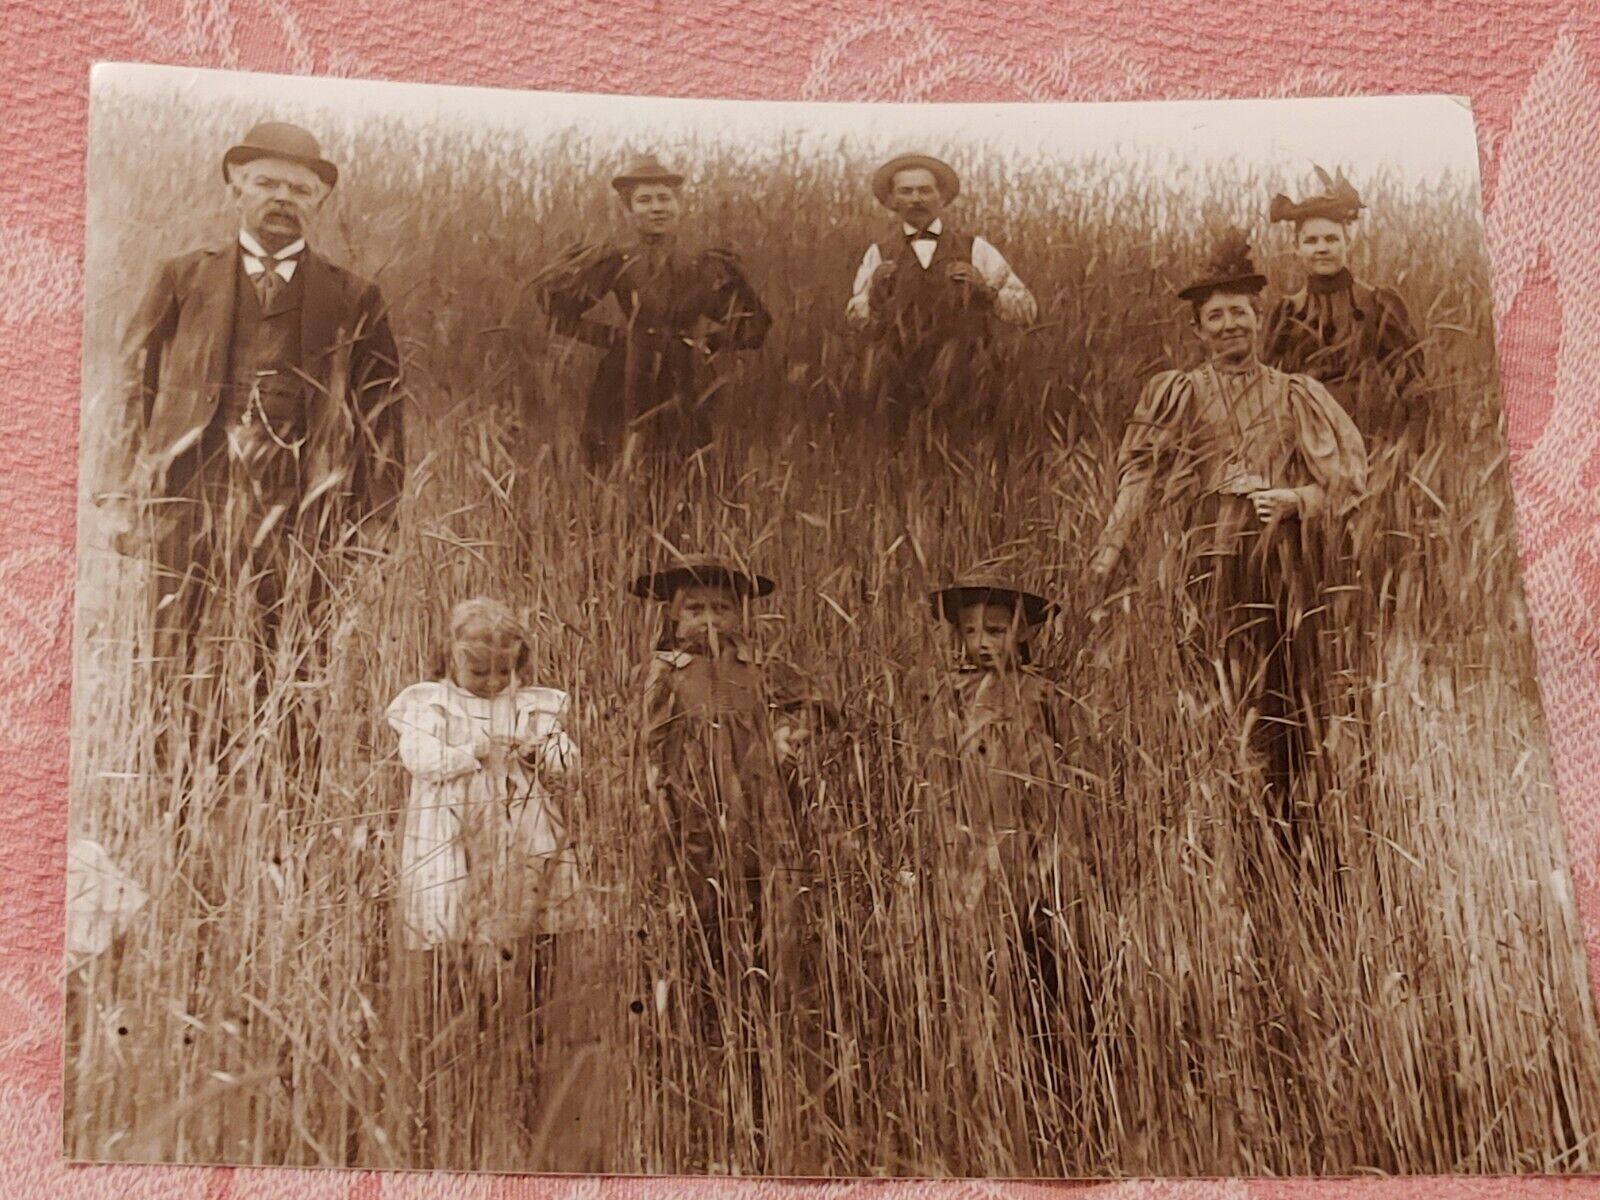 1880s Victorian Era Family In Wheat Field Photo Reprint 